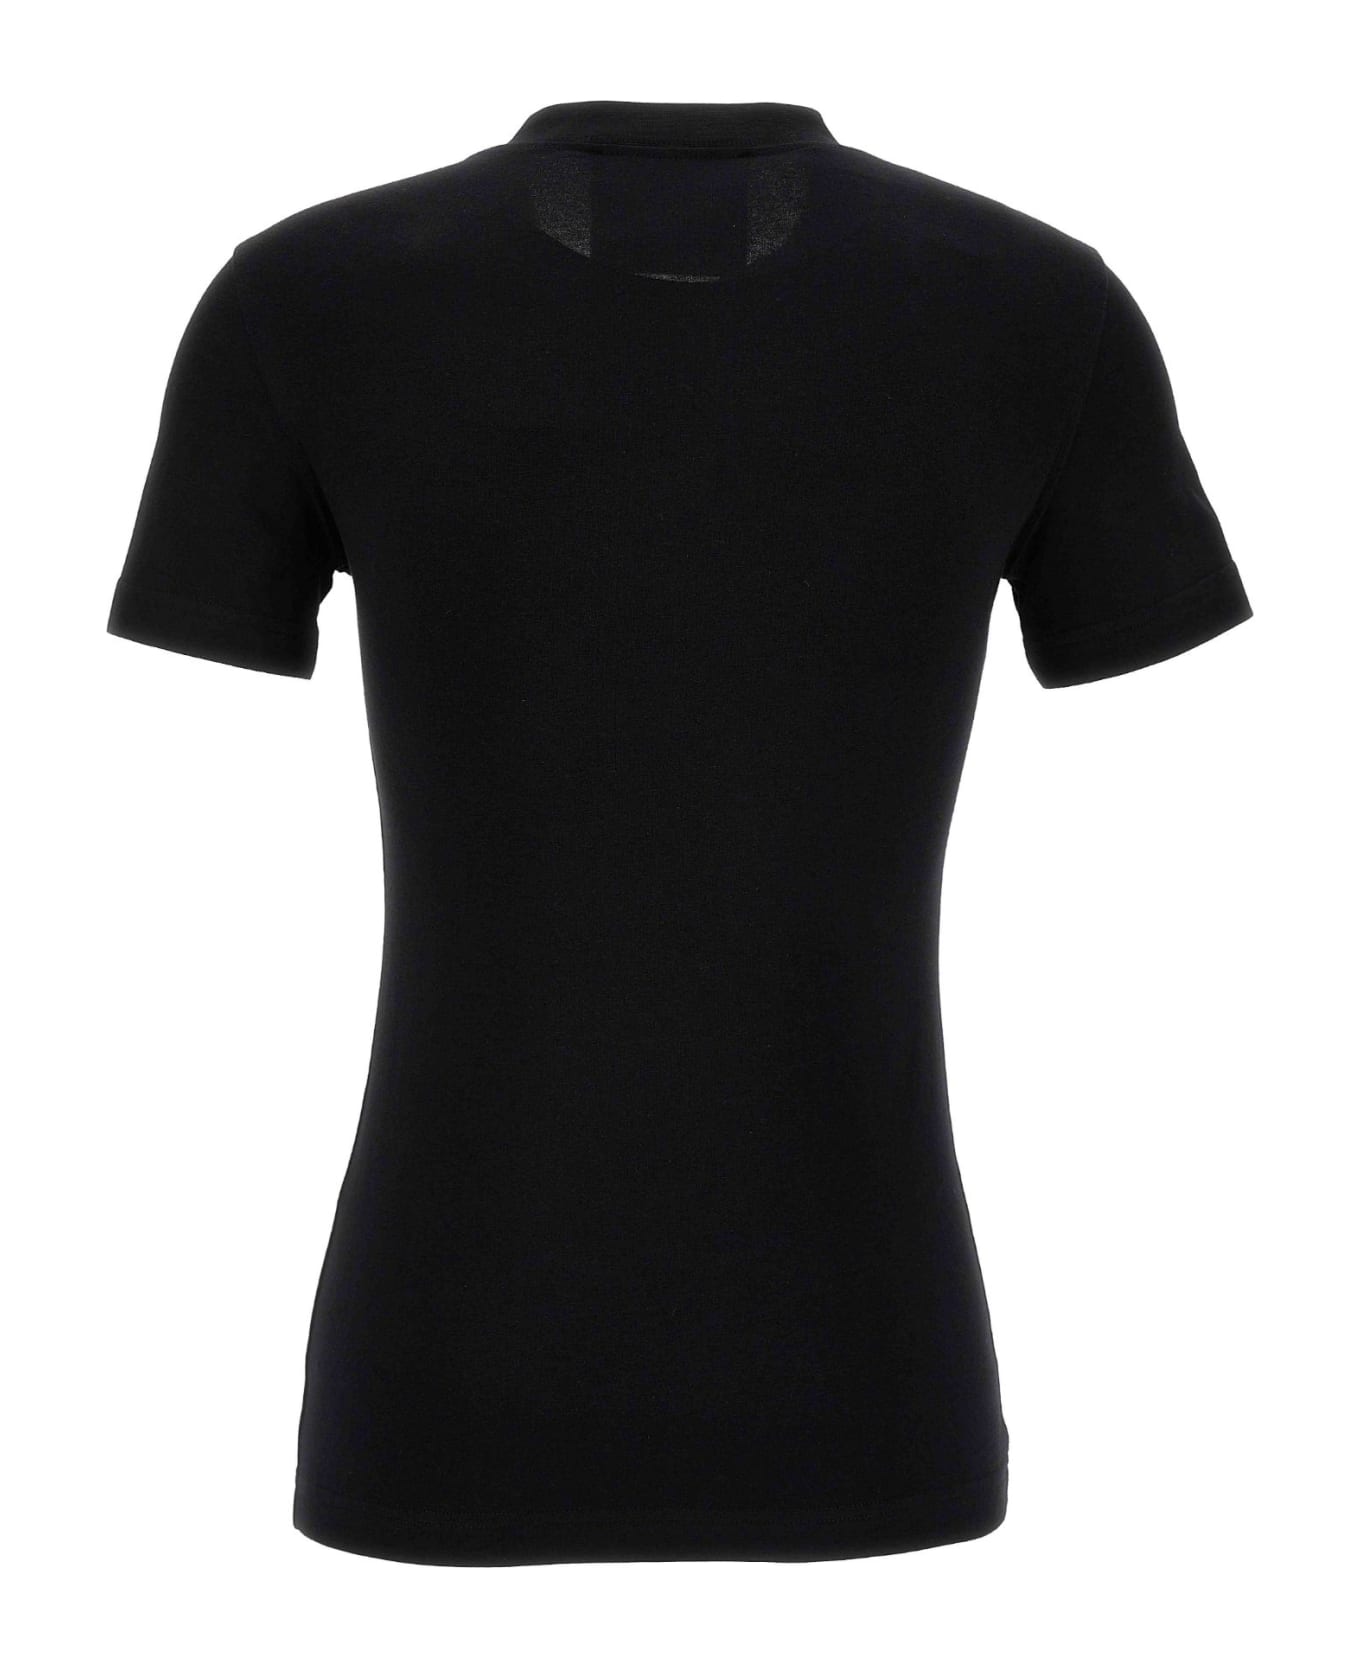 Versace Jeans Couture Women's T-shirt - Black Tシャツ